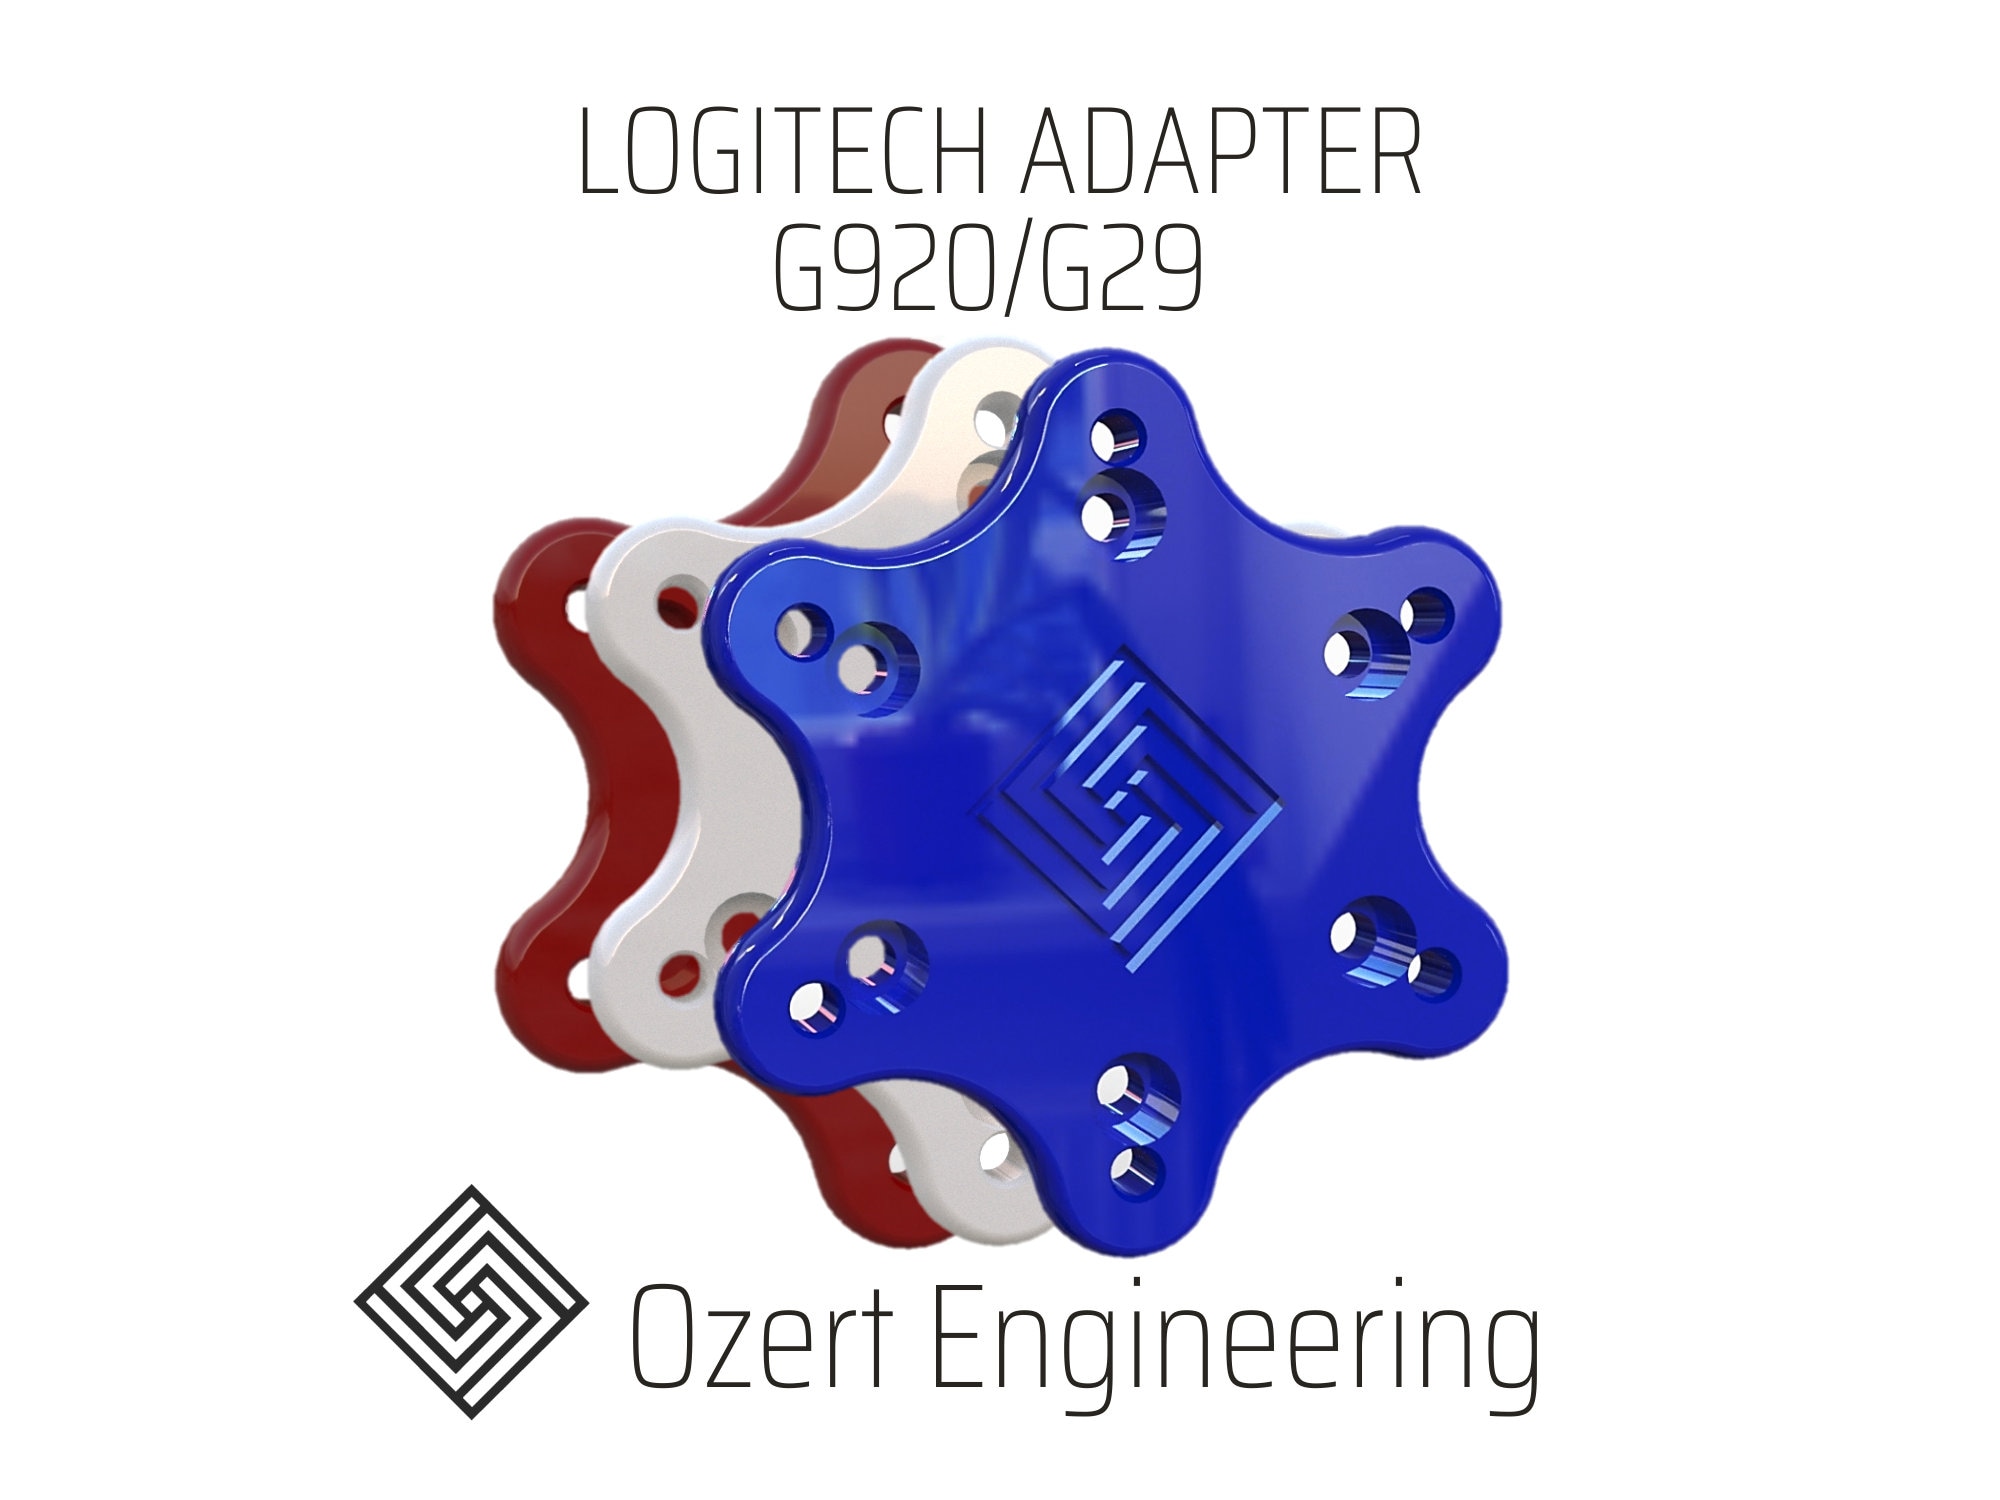 Logitech G29 G920 G923 steering wheel adapter : : PC & Video  Games